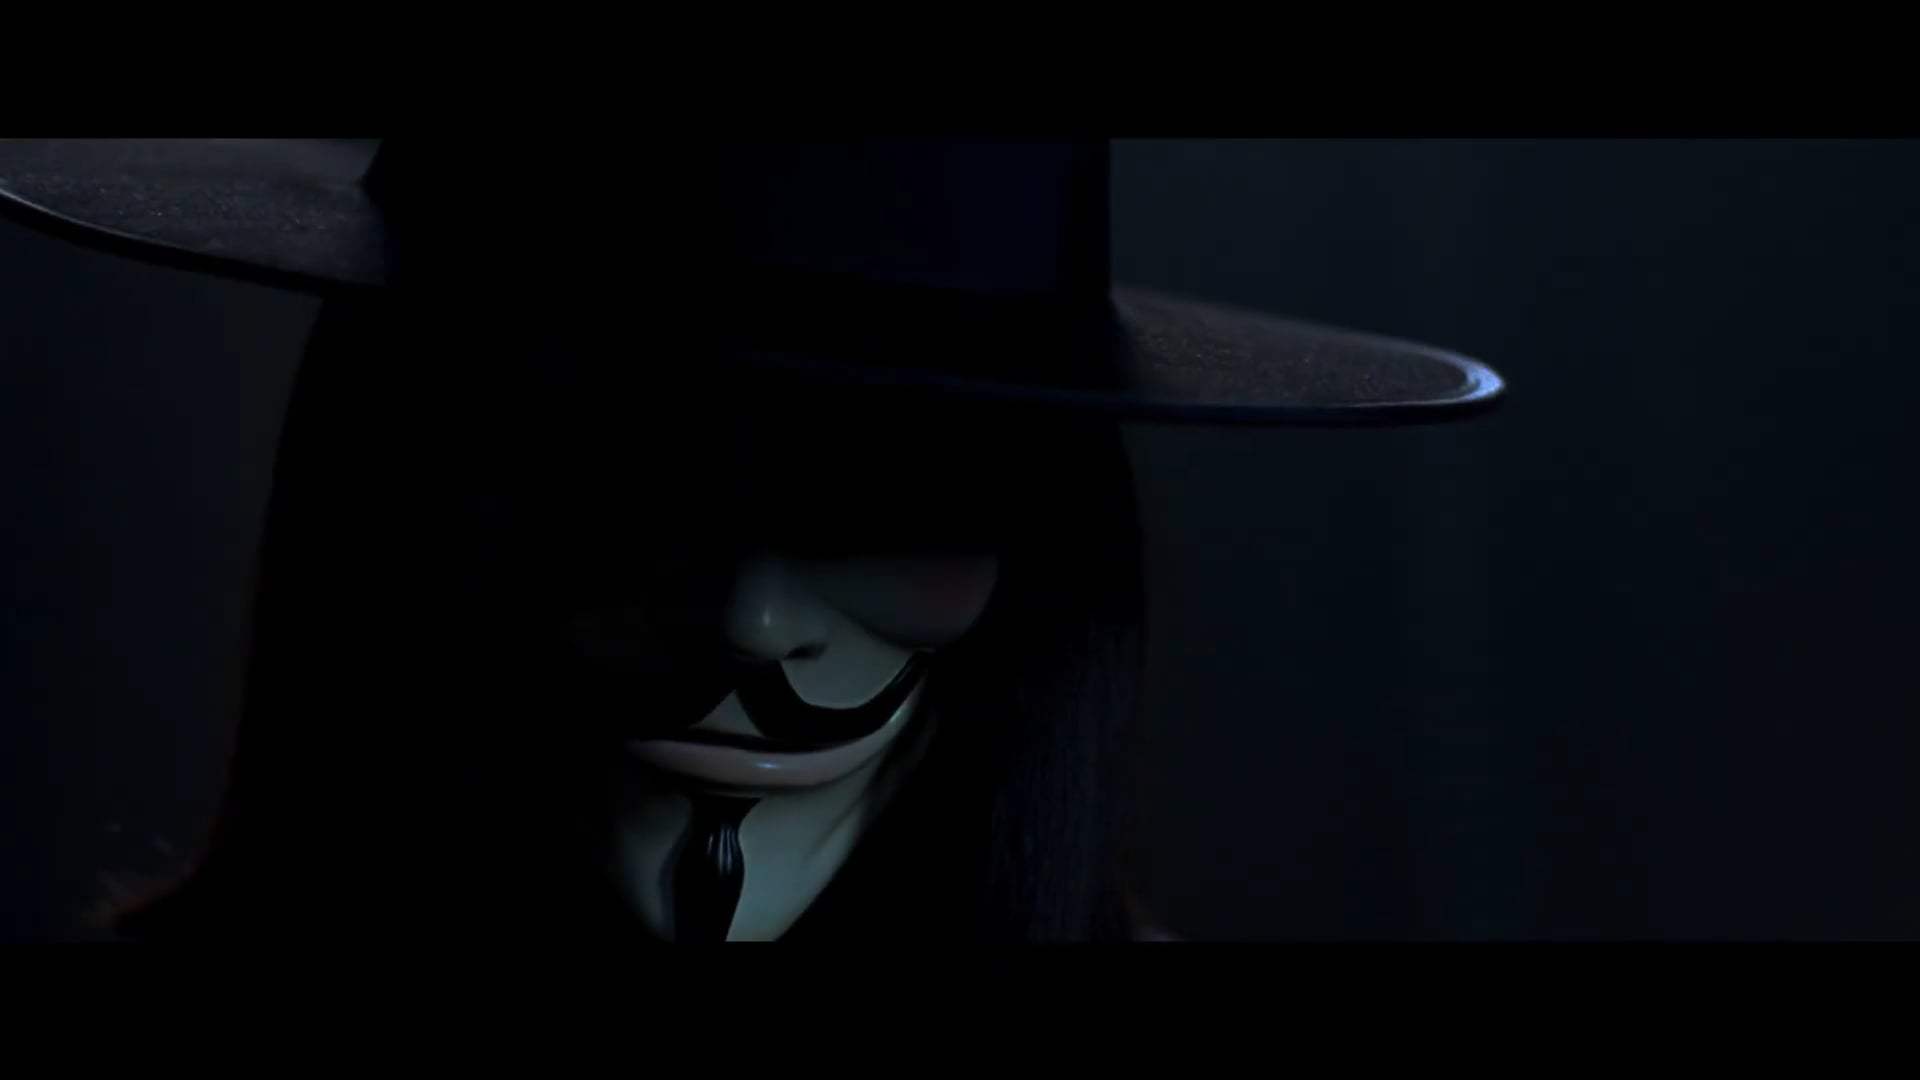 V for Vendetta 4k Ultra HD Trailer (2006) Screen Capture #4